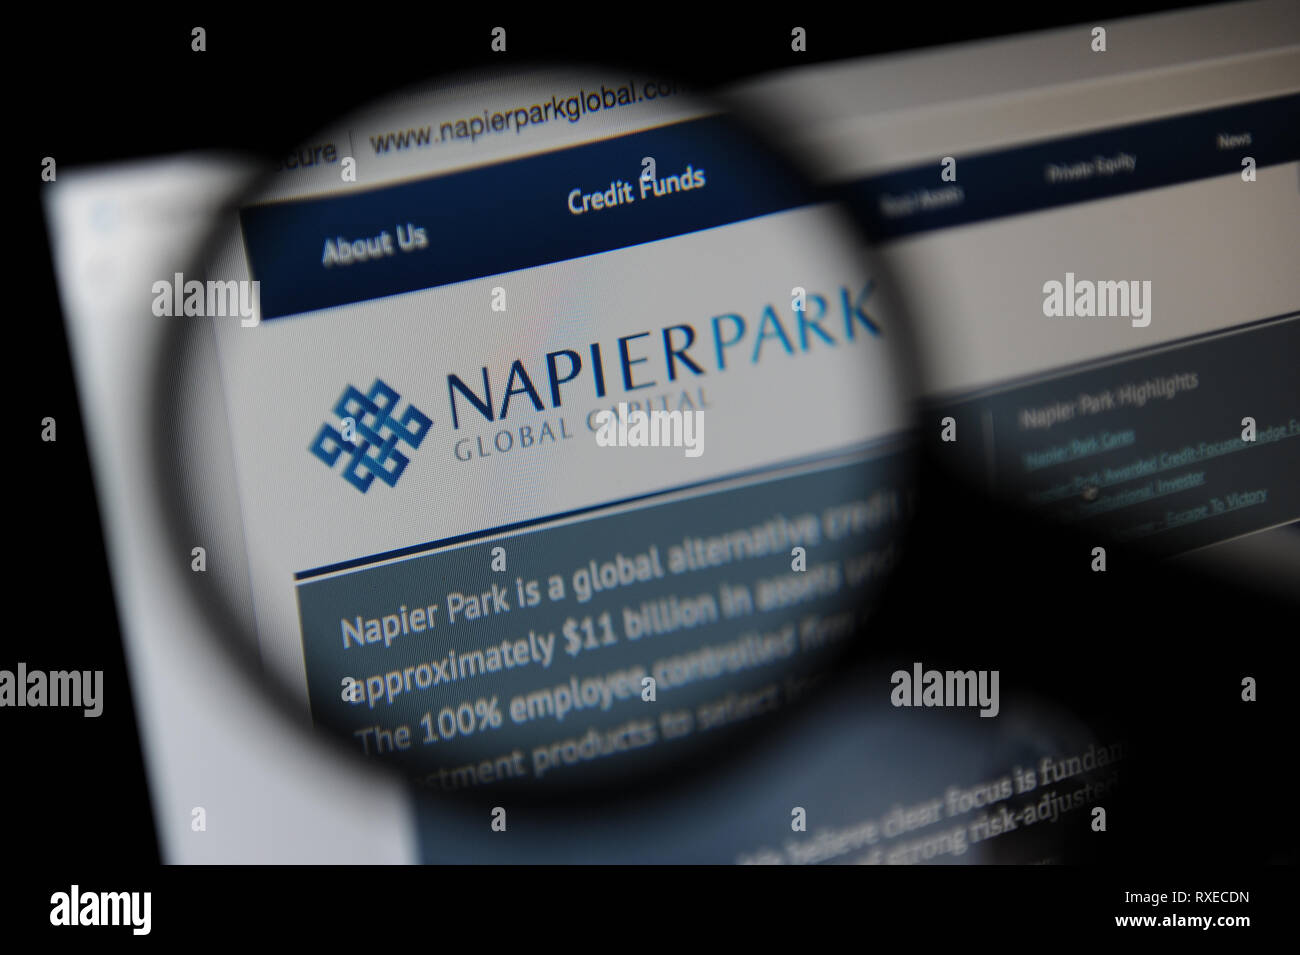 Napier Park Global Capital website seen through a magnifying glass Stock Photo